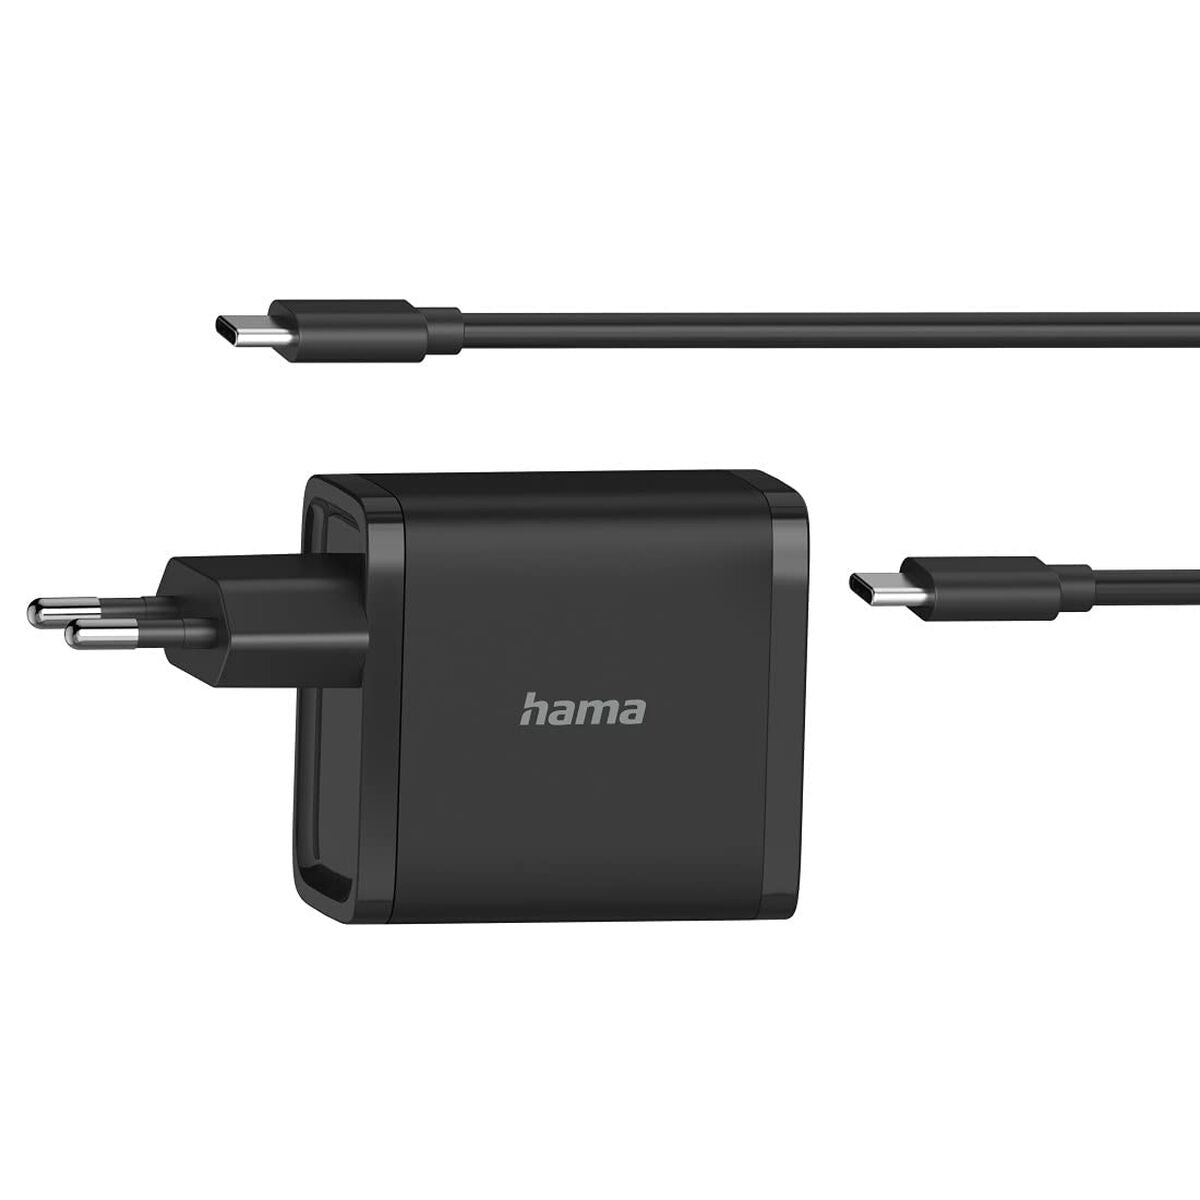 Hama Laptop-Ladegerät 00200005 Schwarz